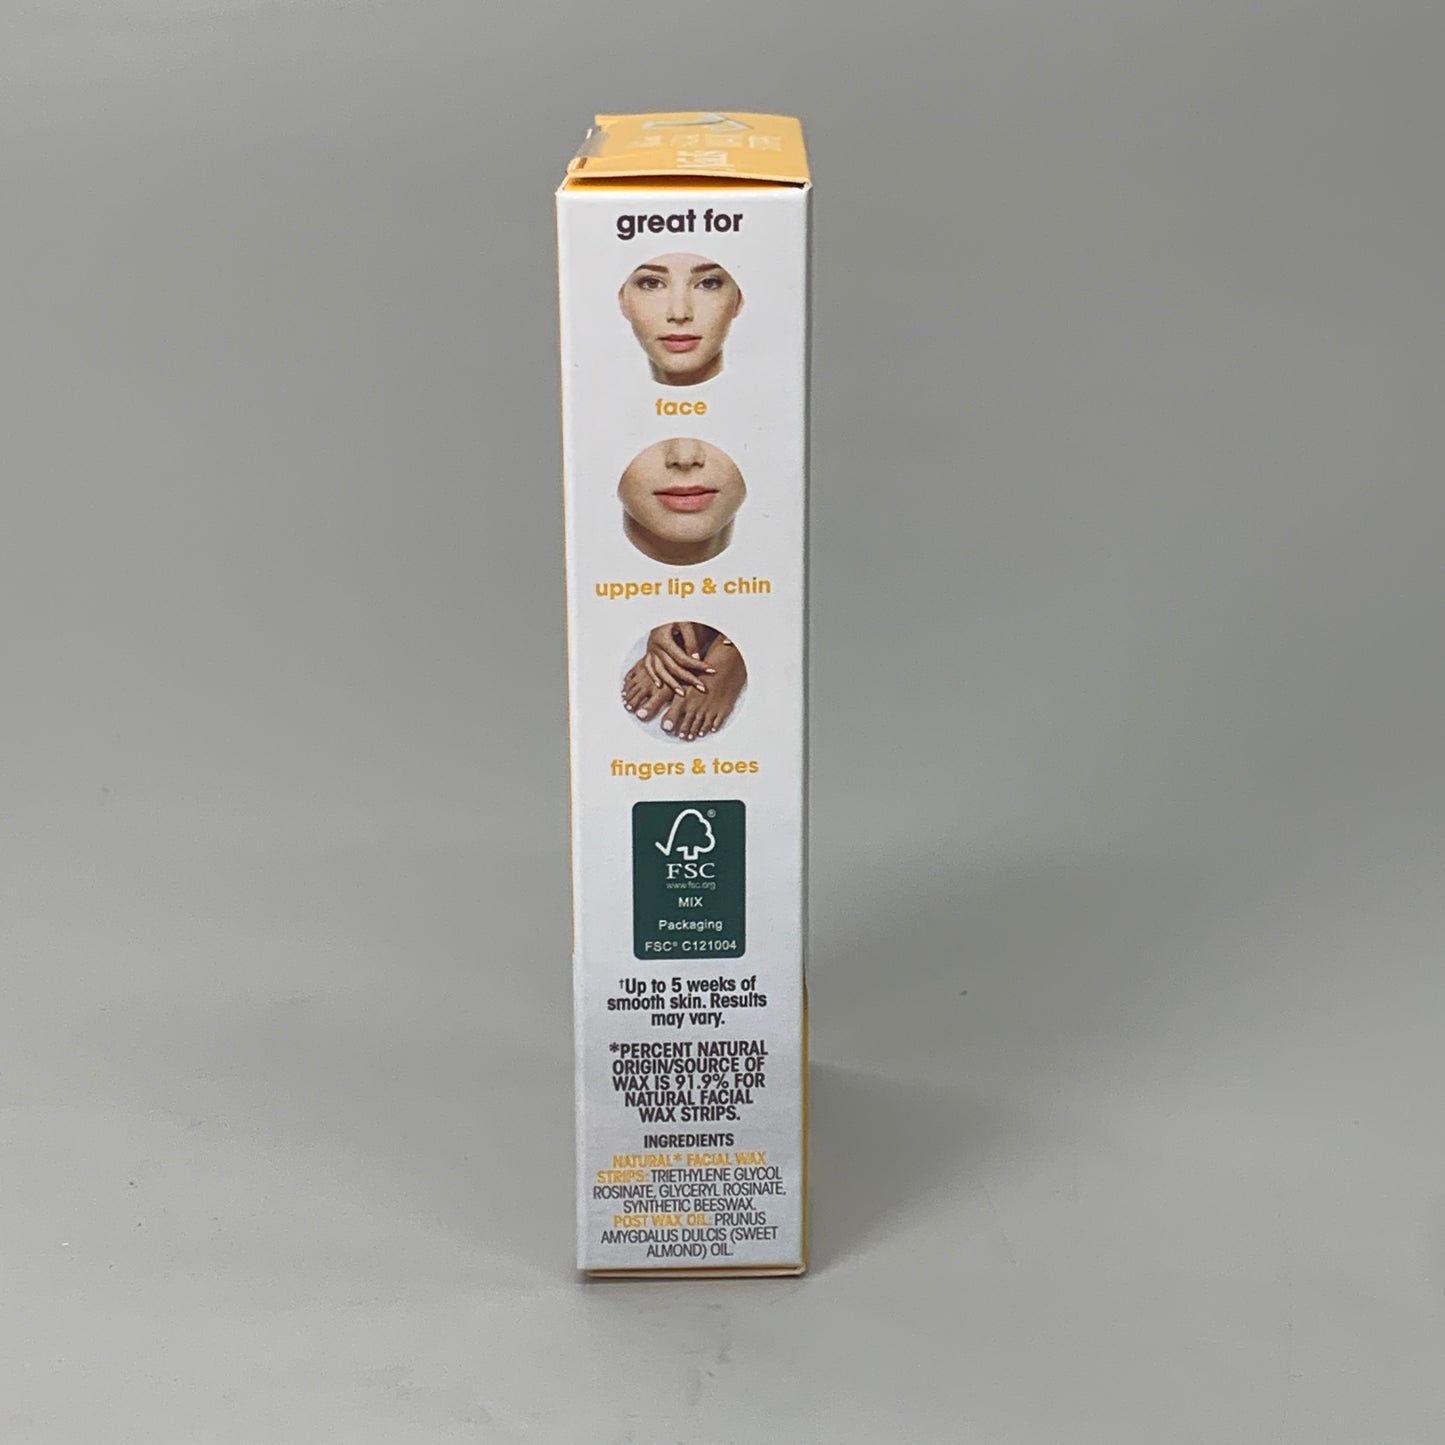 NADS 3 PK Natural Facial Wax Strips Vegan With Post Wax Oil 6501EN06